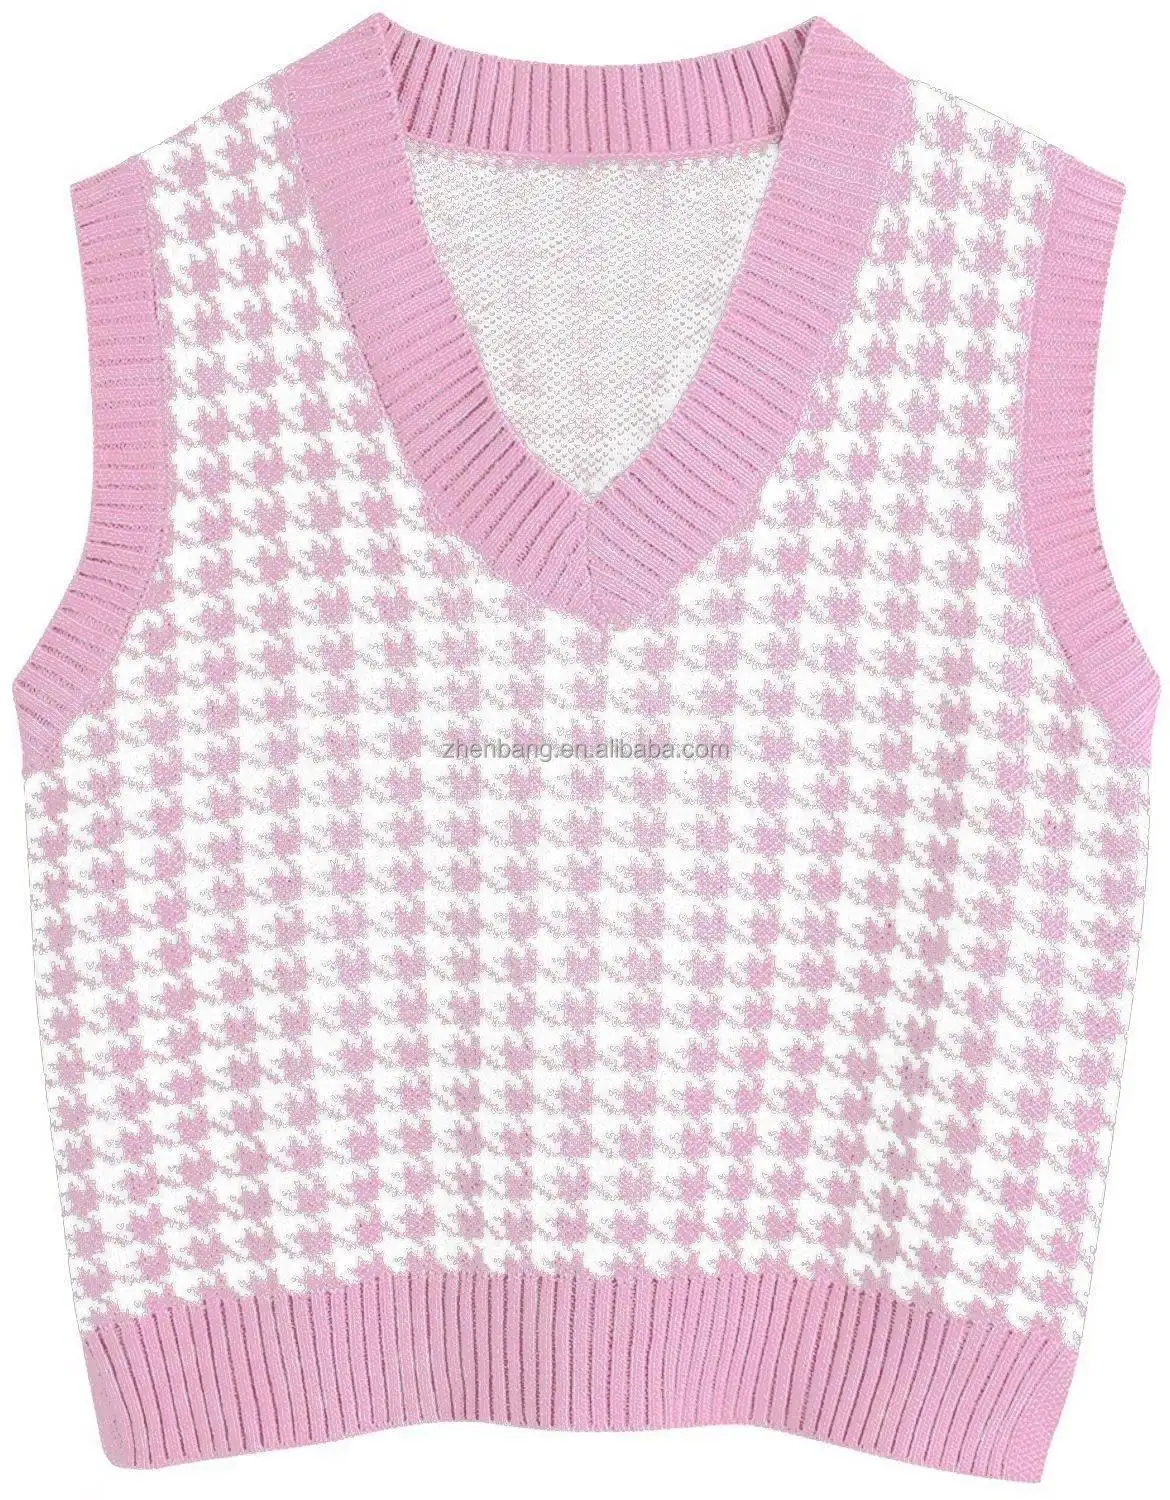 Hot Selling Korean V Neck Sleeveless Autumn Winter Jumper Knitted Pullover Loose Tops Women Houndstooth Winter Vest Sweater